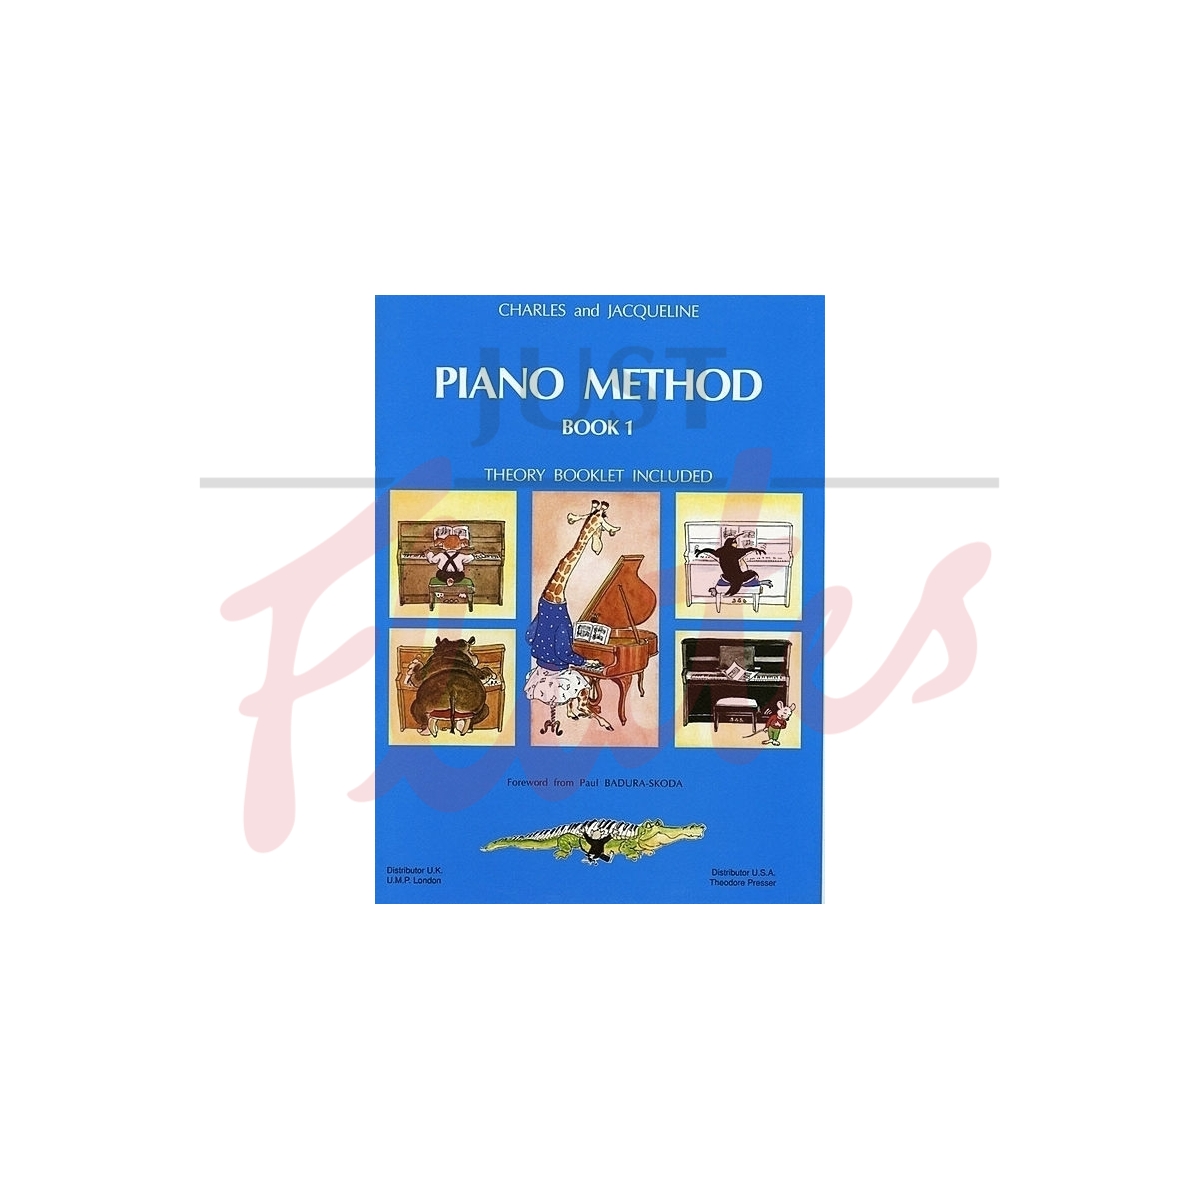 Piano Method Book 1